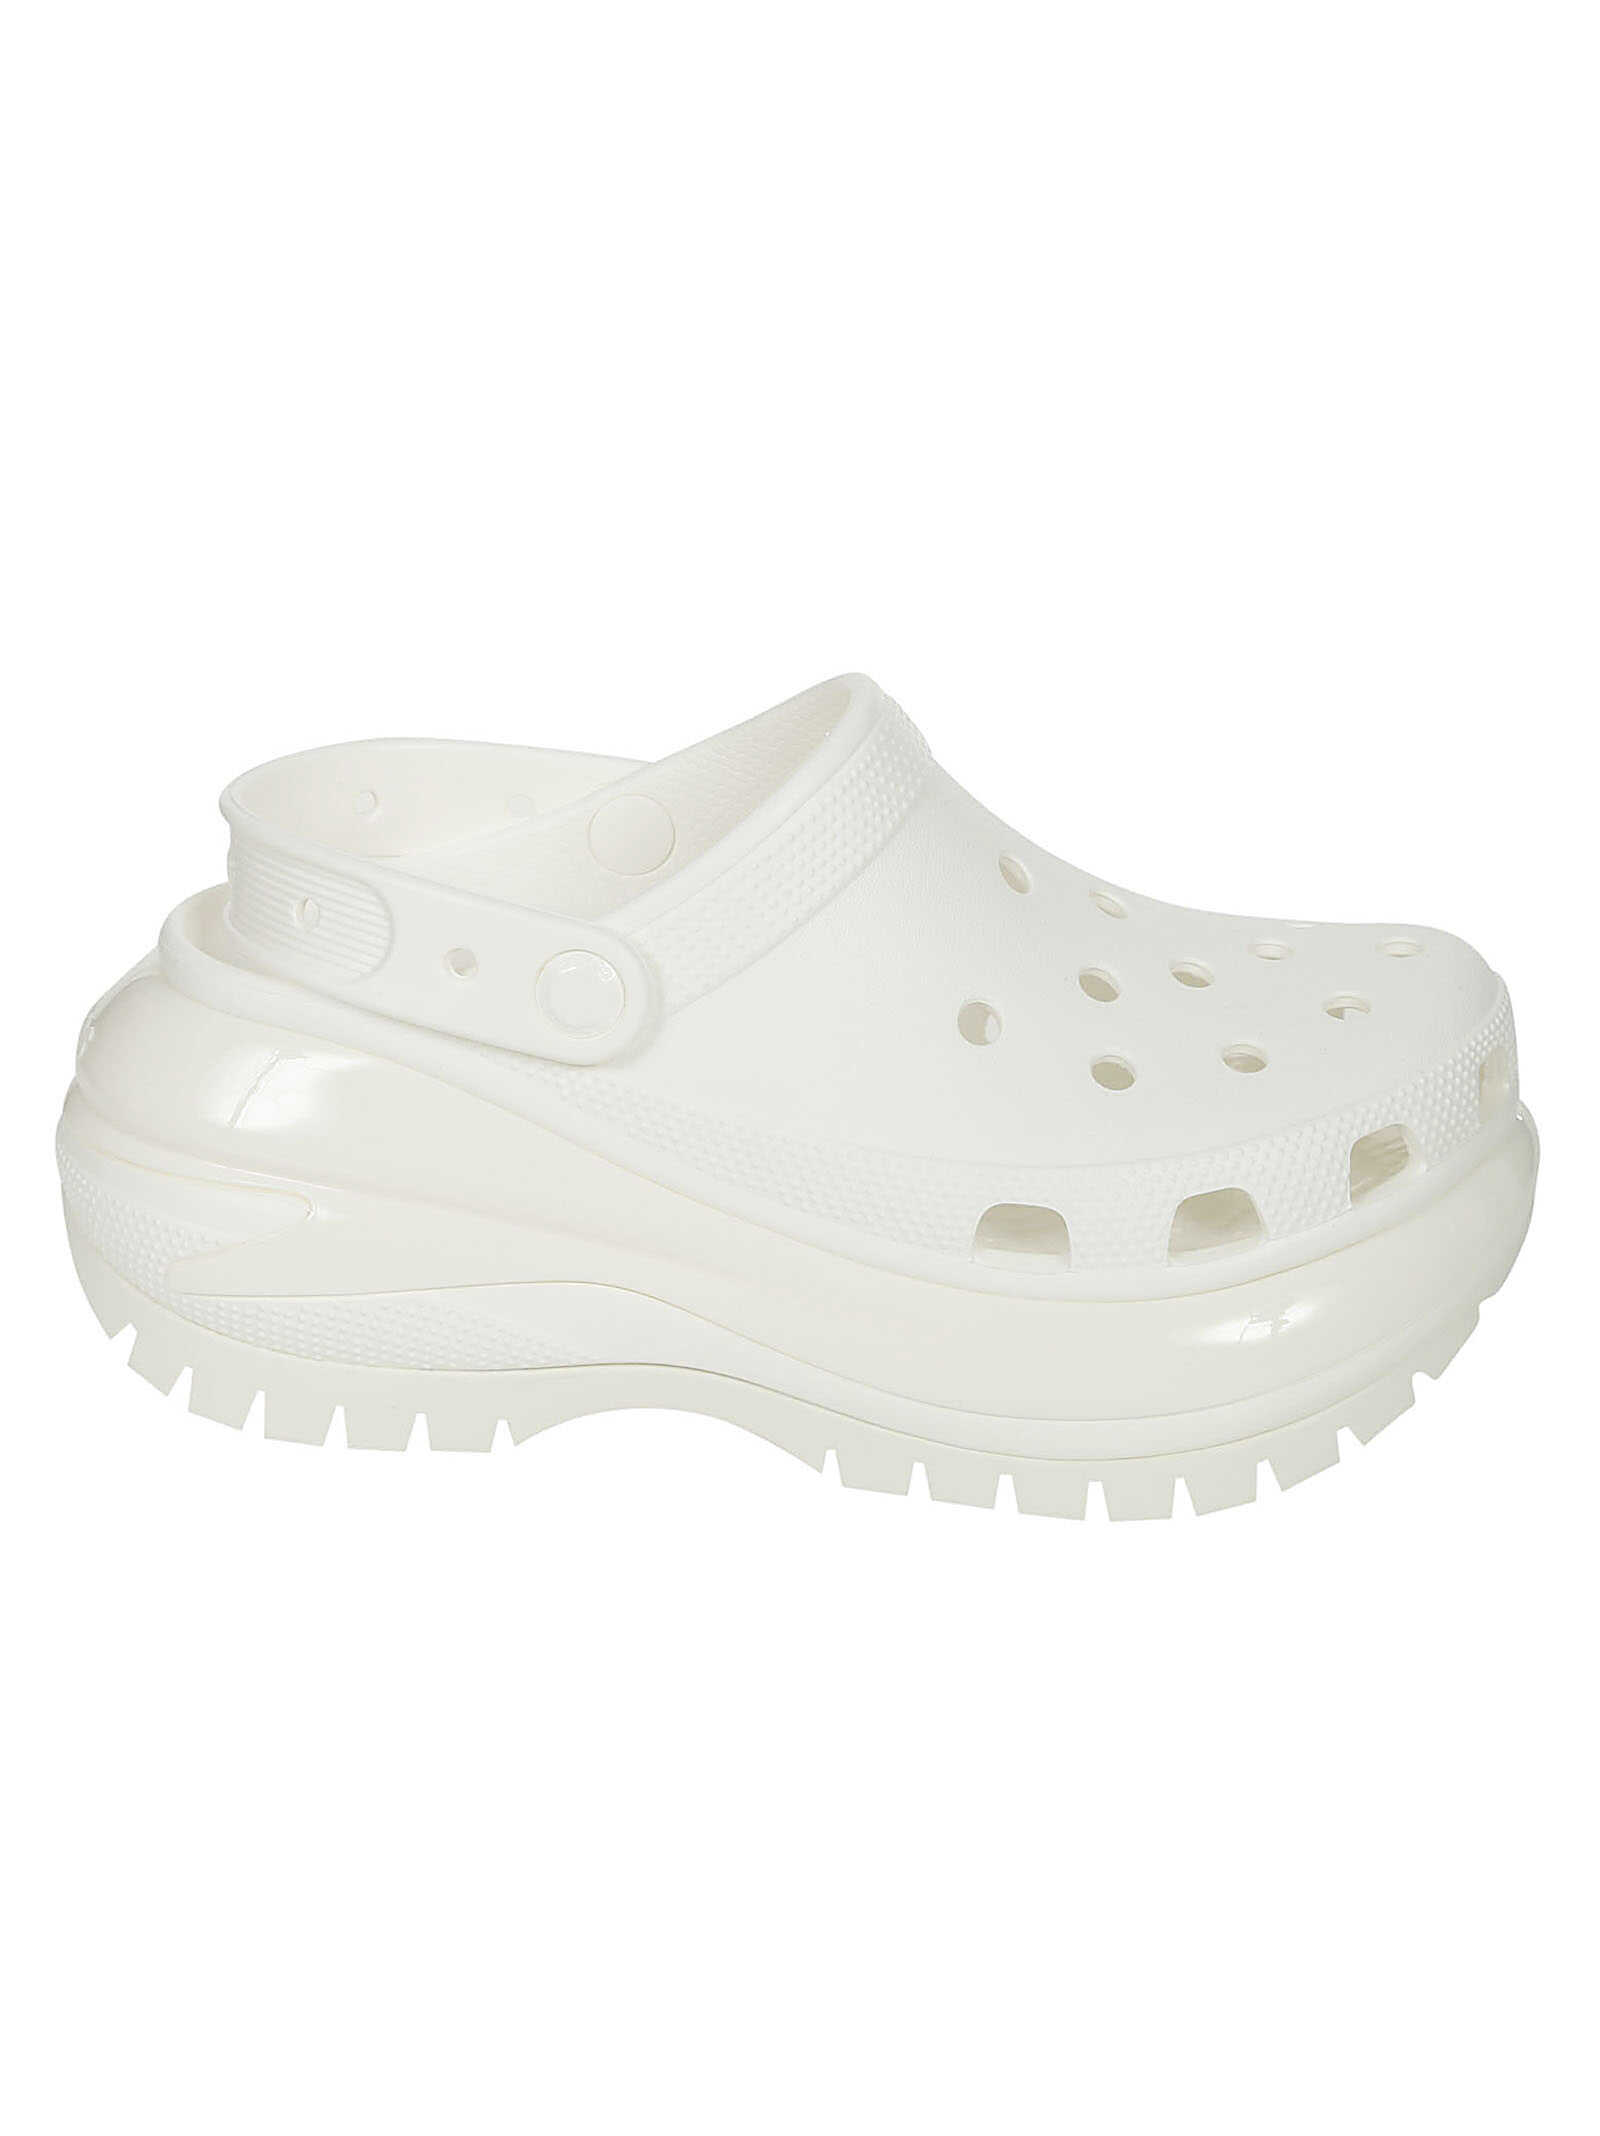 Crocs Crocs Slippers CR.207988 BLK BLACK Whi White